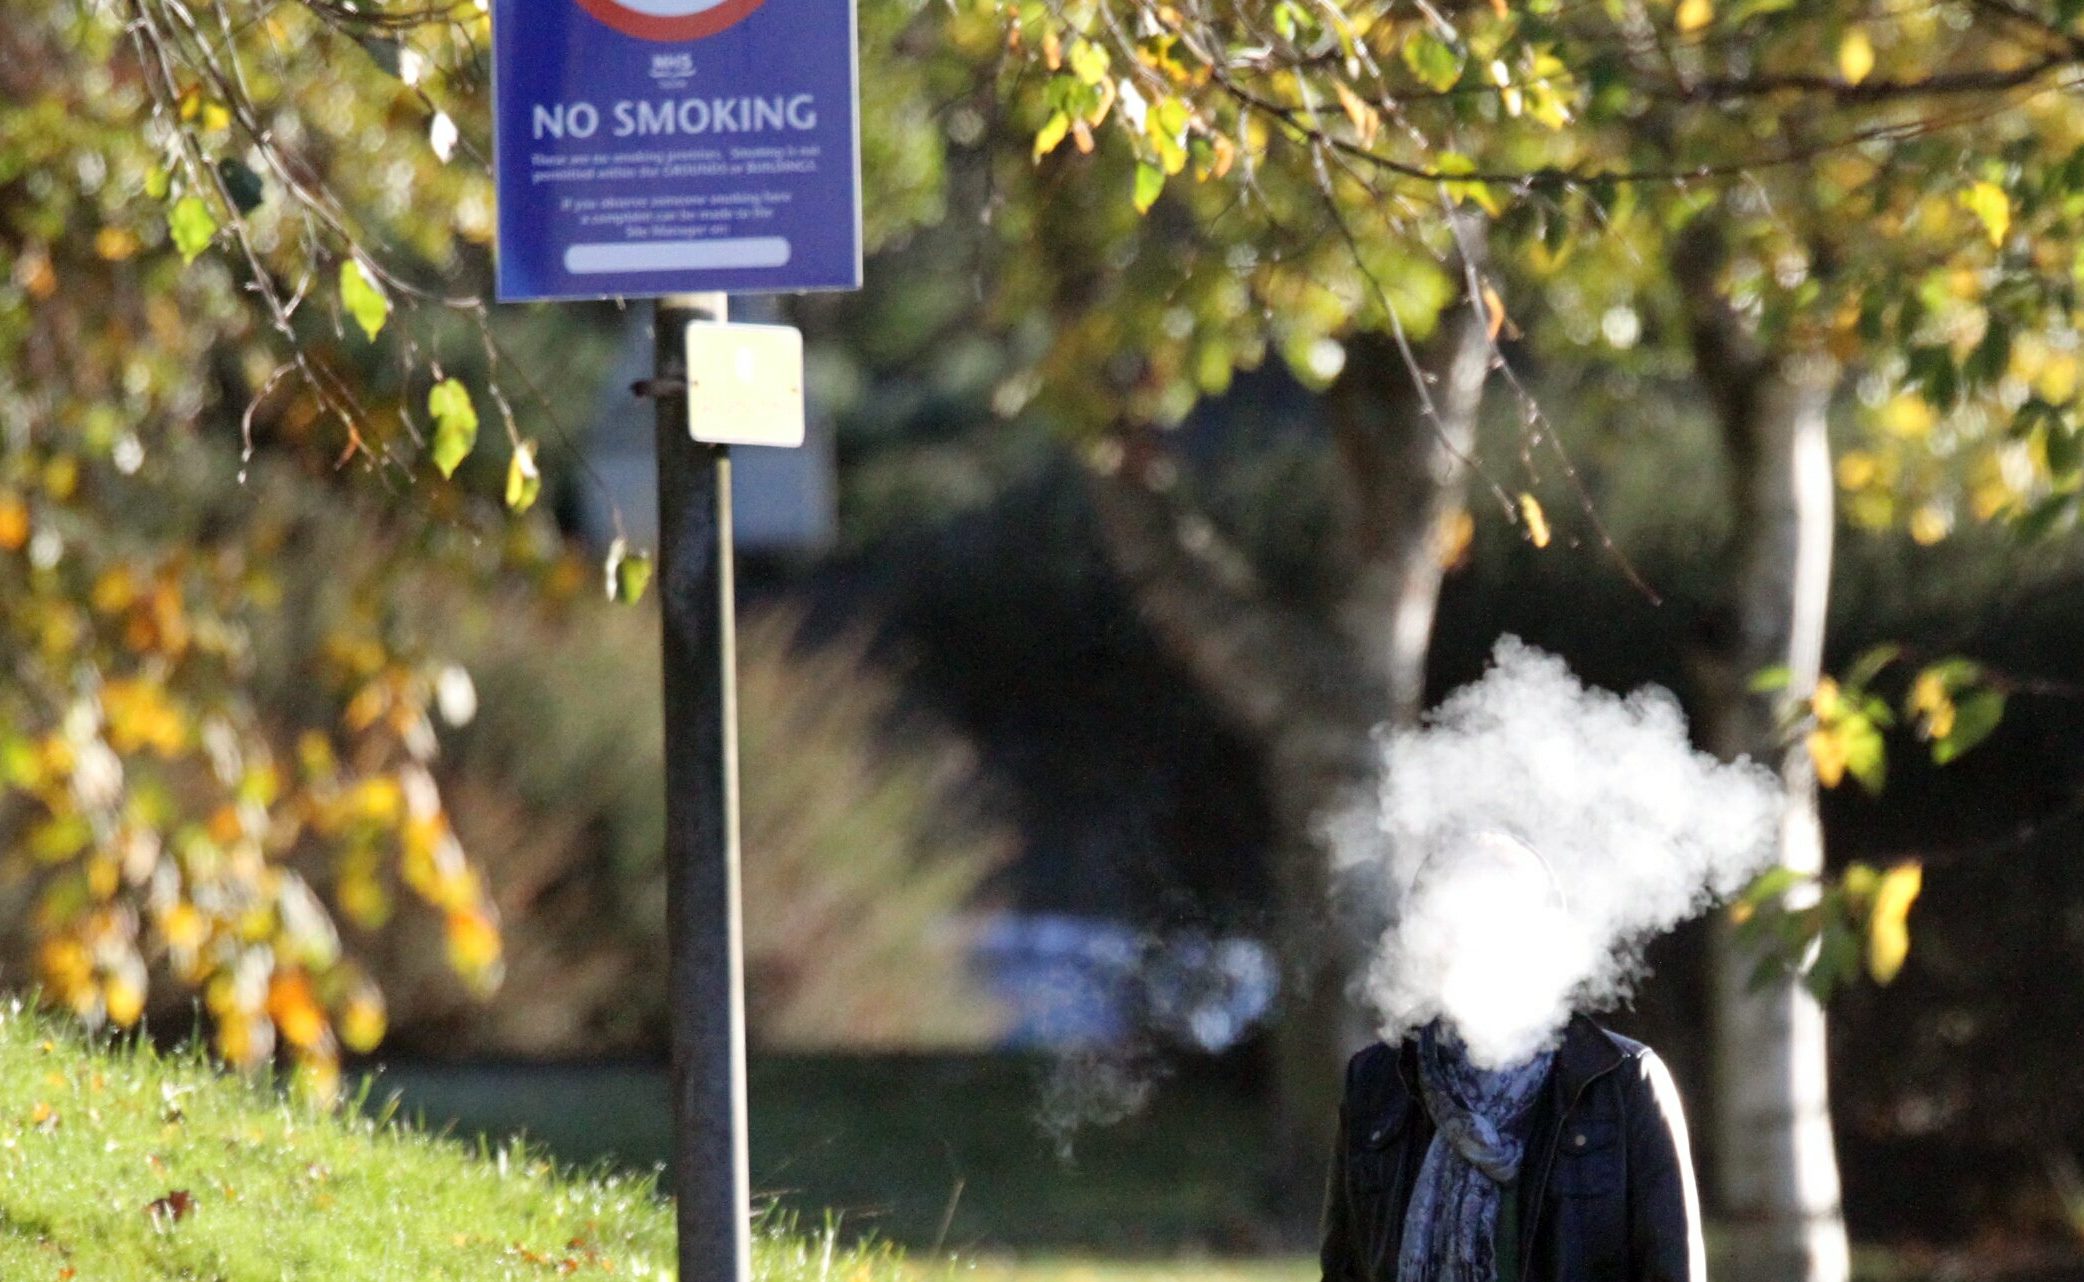 Smoking on the grounds of Ninewells Hospital.